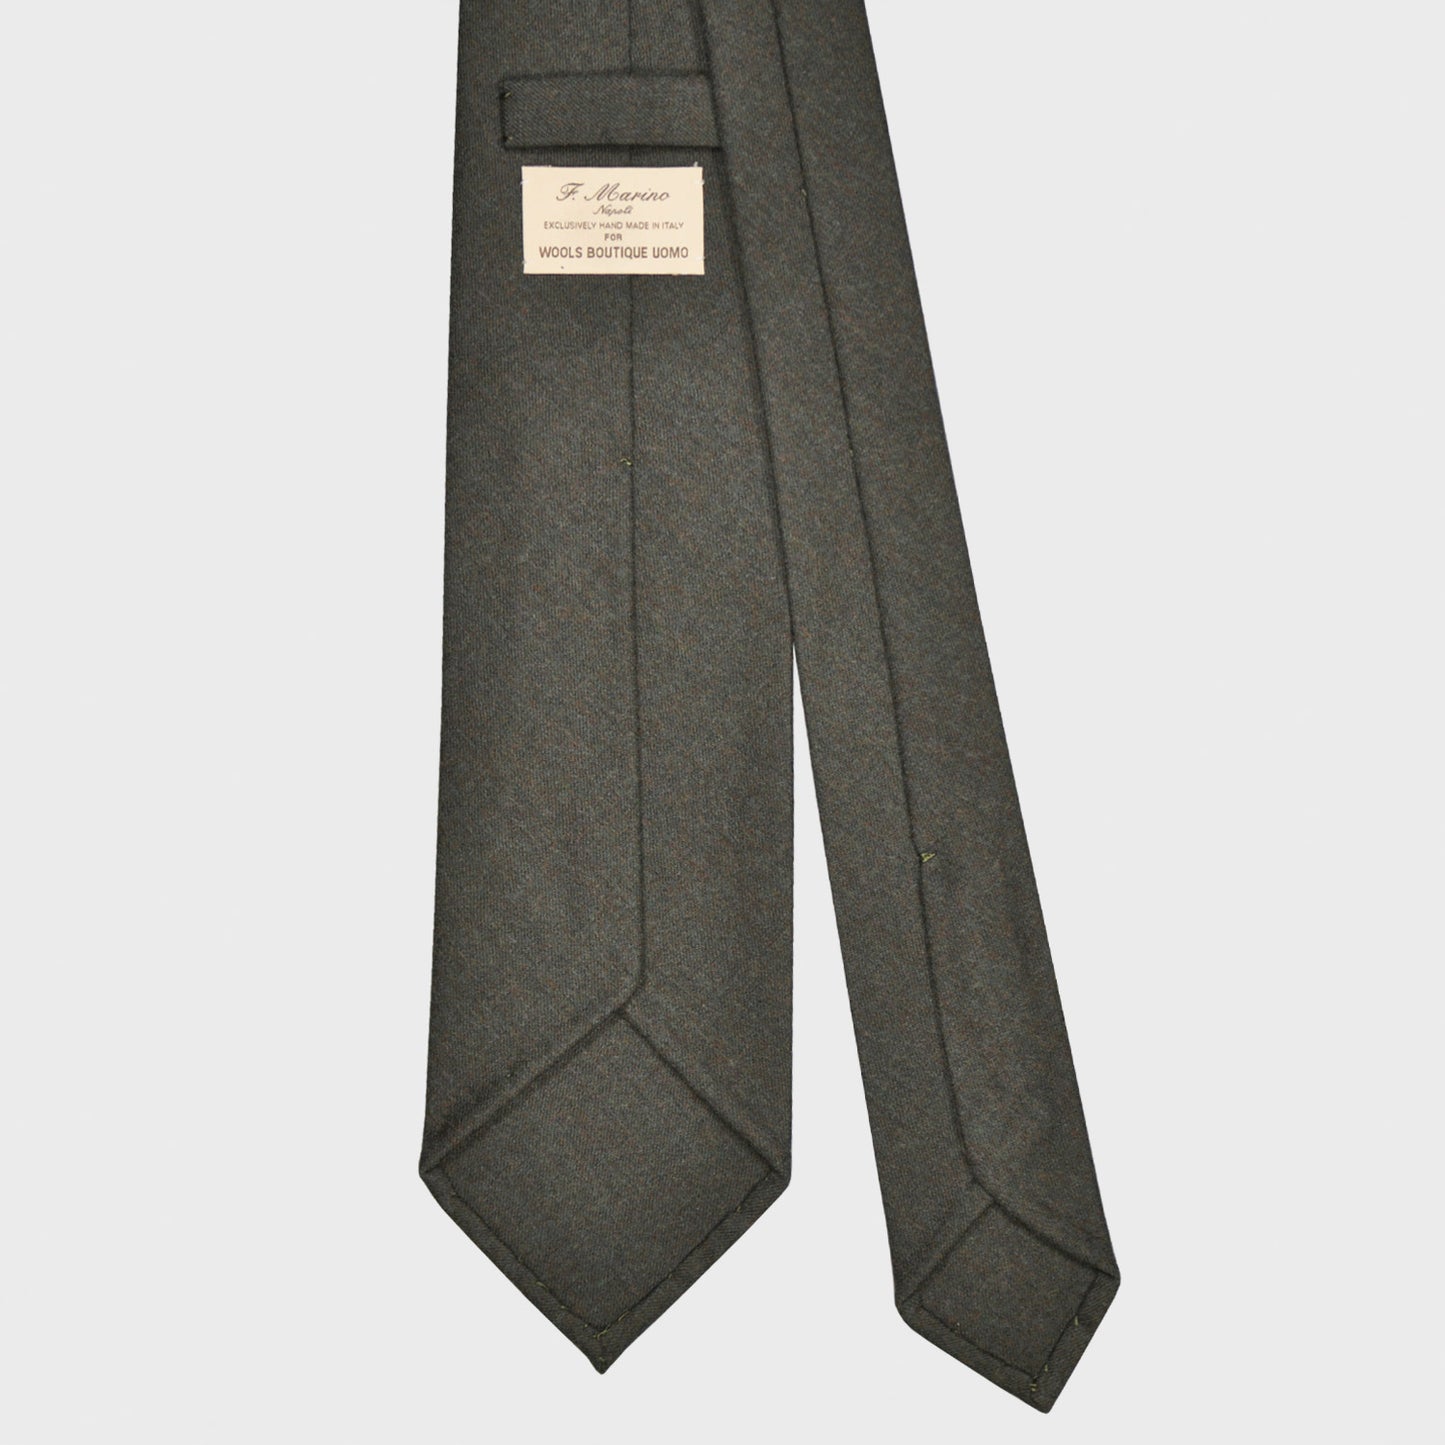 F.Marino Flannel Wool Tie 3 Folds Mud-Wools Boutique Uomo